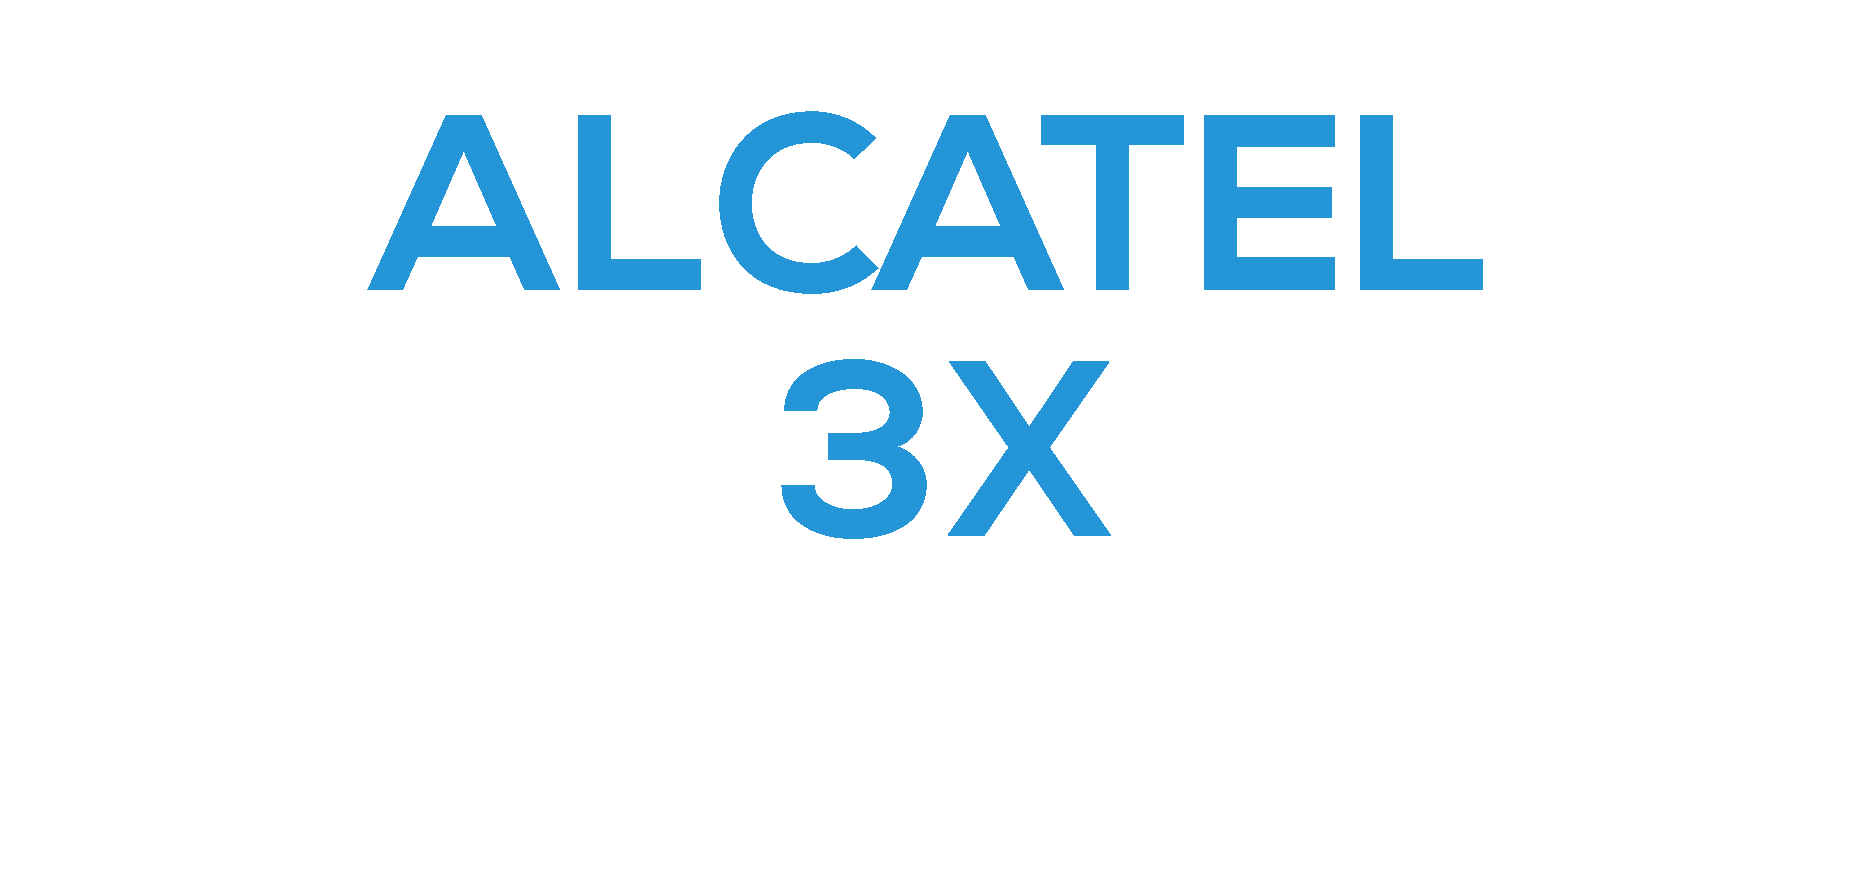 Alcatel 3X